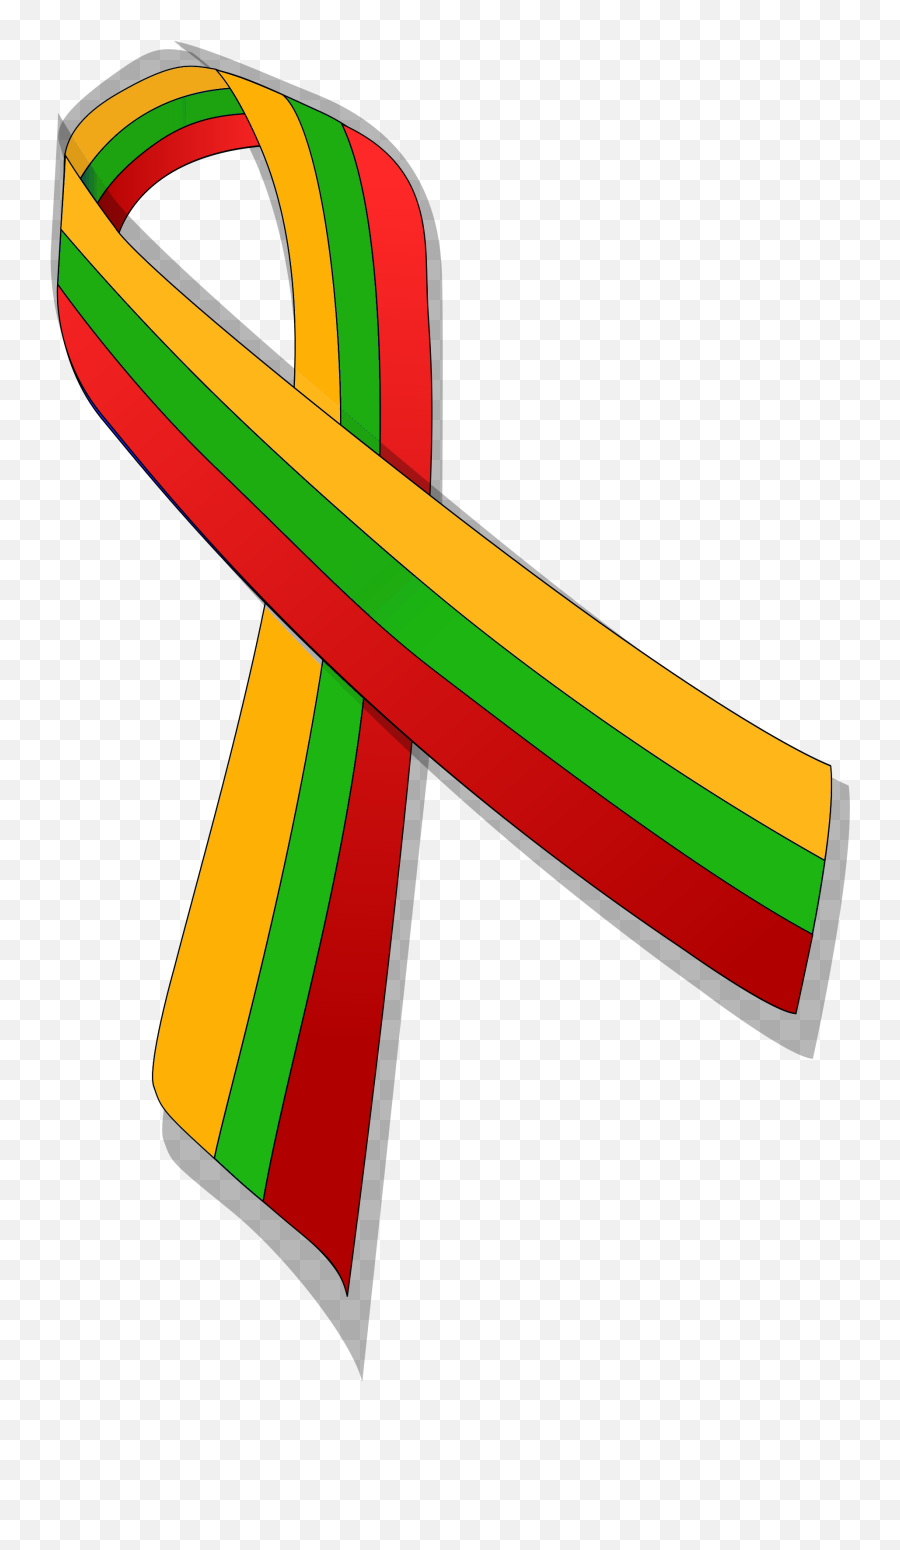 Lithuania Ribbon - Lithuania Flag Ribbon Emoji,Lithuanian Flag Emoji